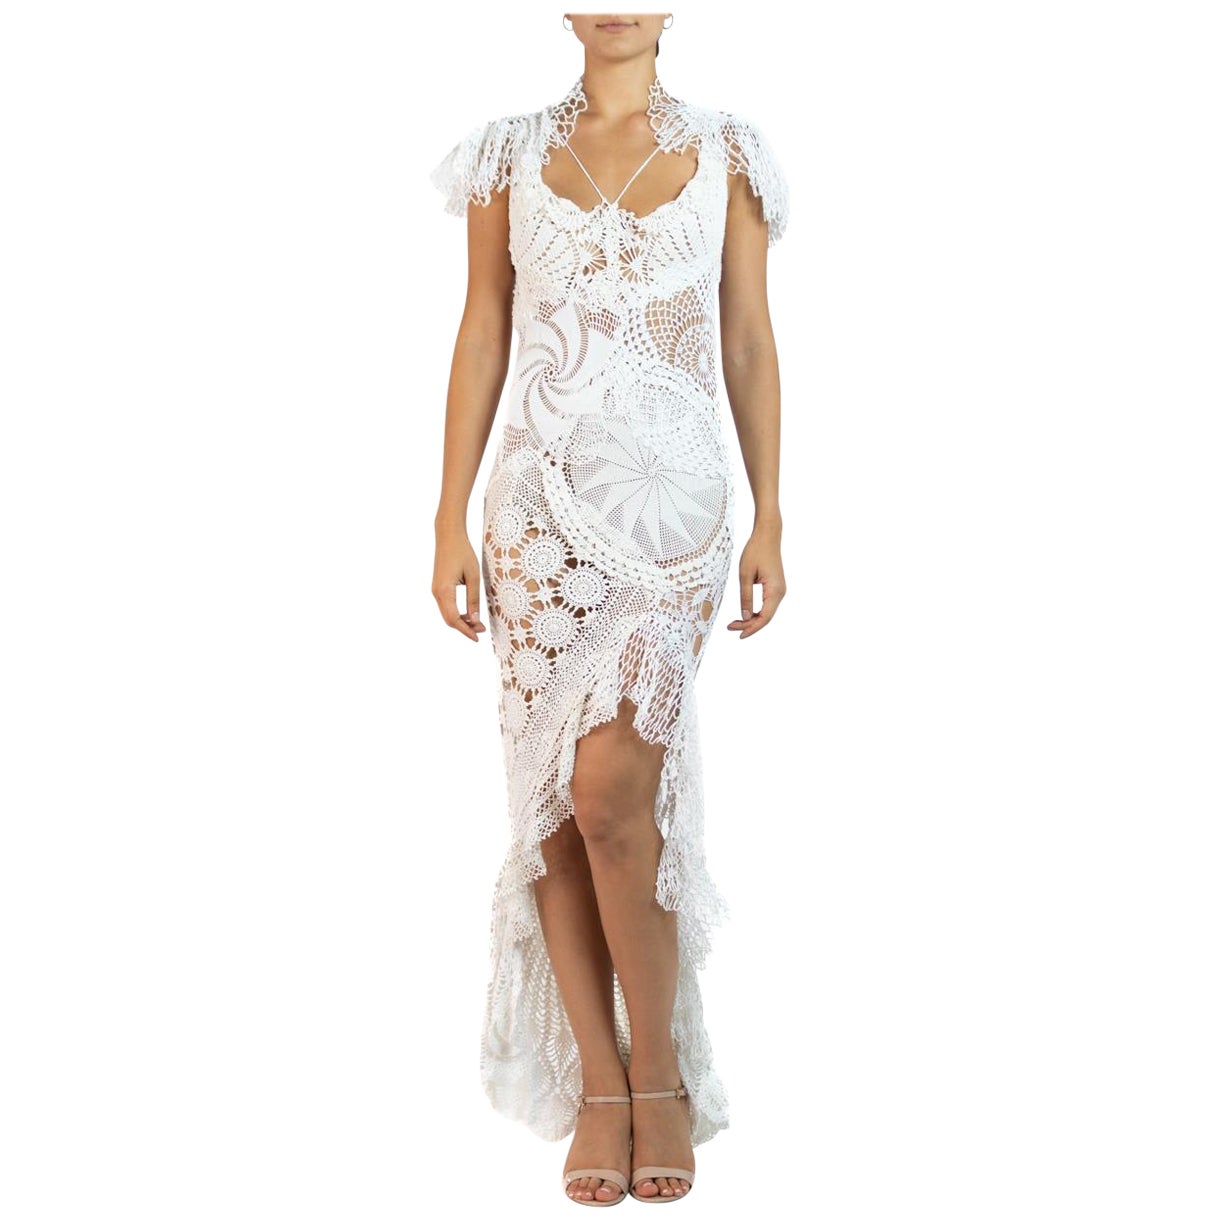 Morphew Collection White Cotton Crochet Long Vintage Doily Dress Master